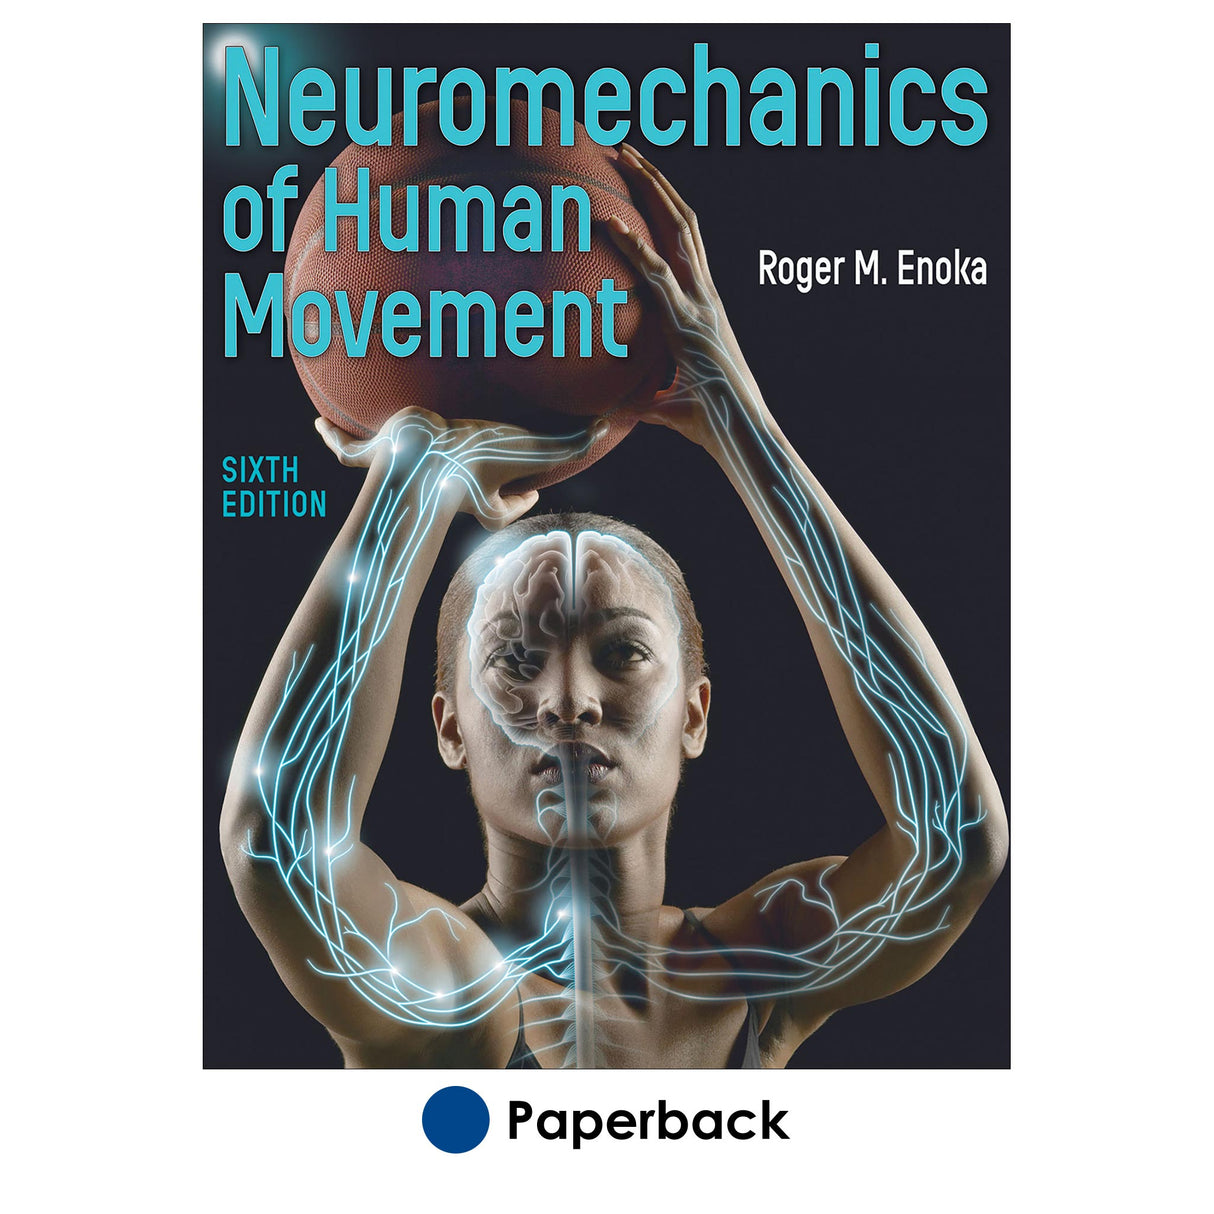 Neuromechanics of Human Movement-6th Edition